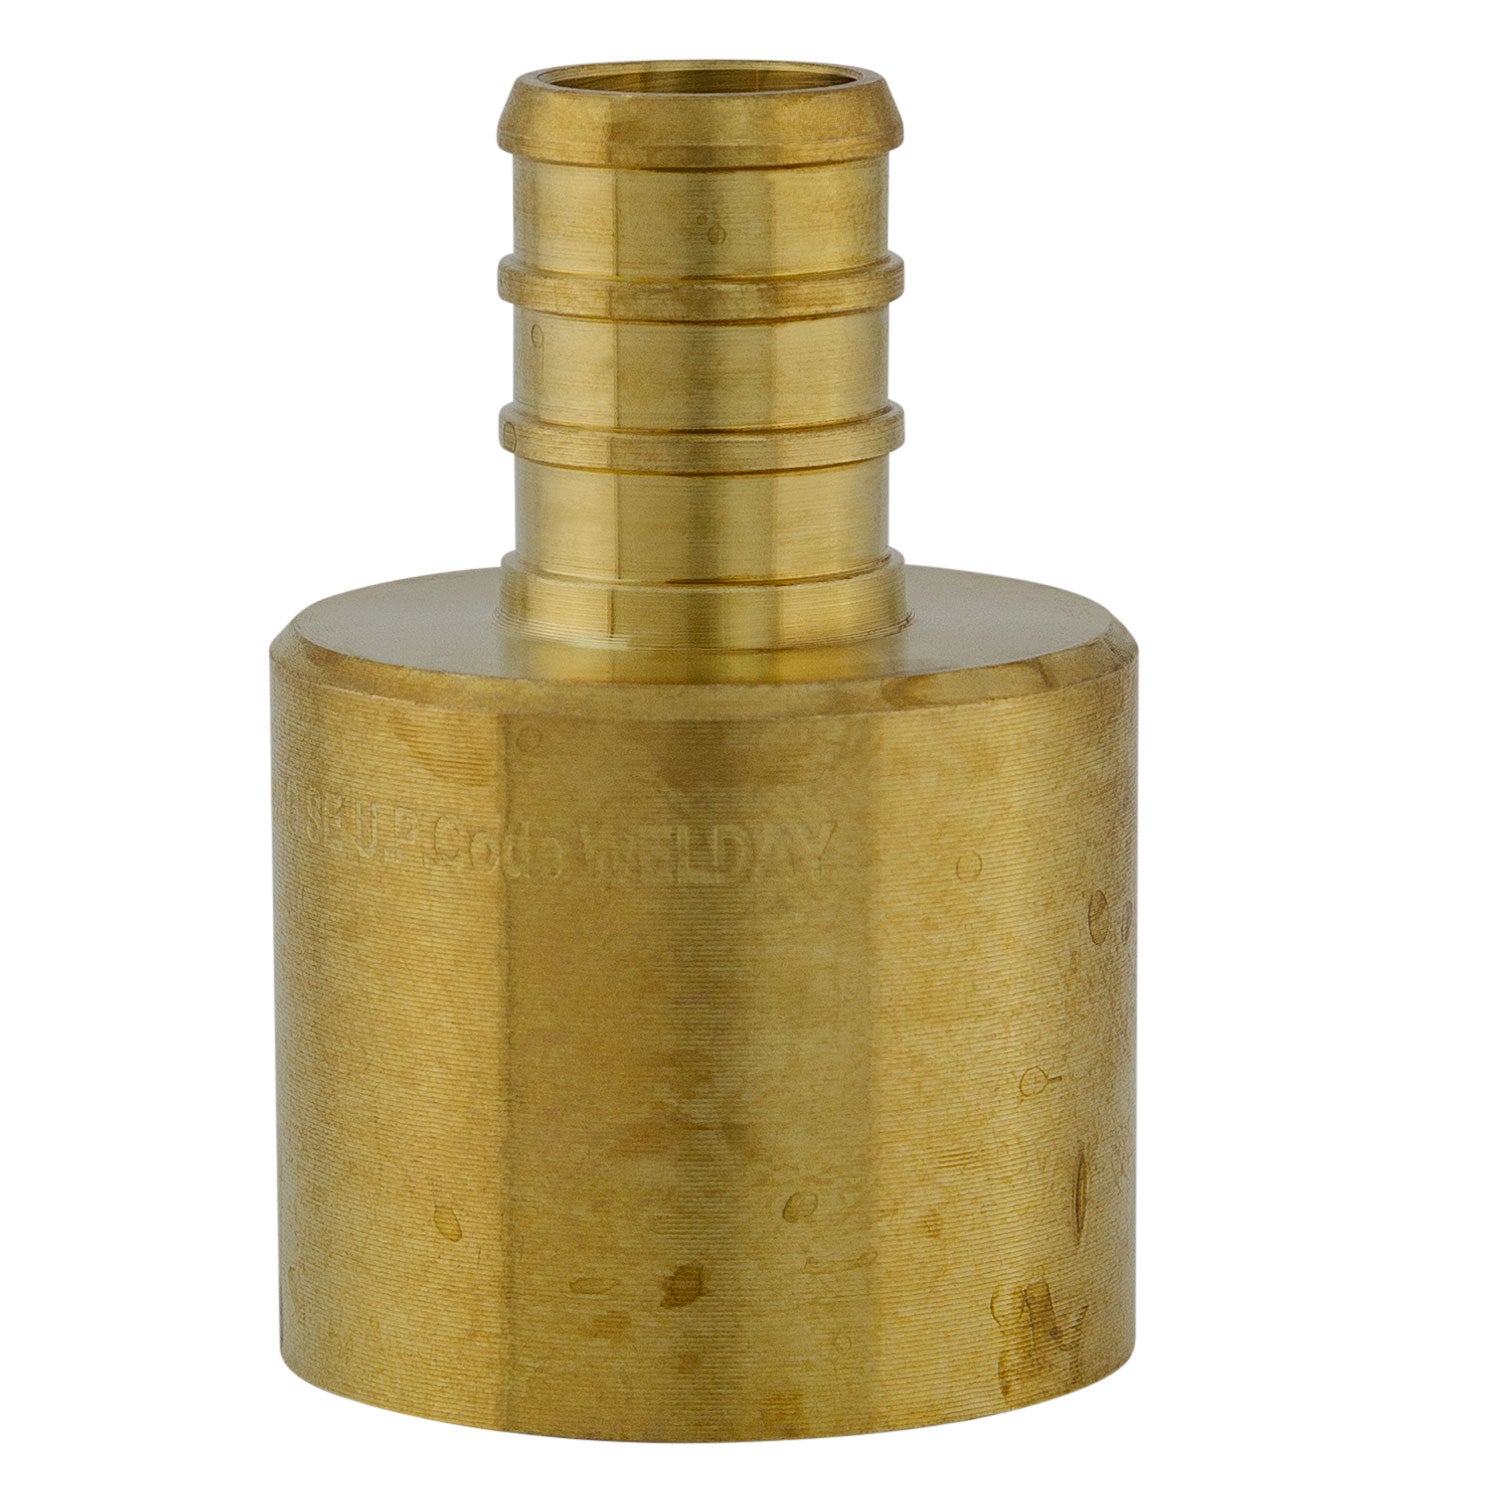 3/4" PEX B Crimp x 1" C Lead Free Brass Fitting Female Sweat Adapter, ASTM F1807